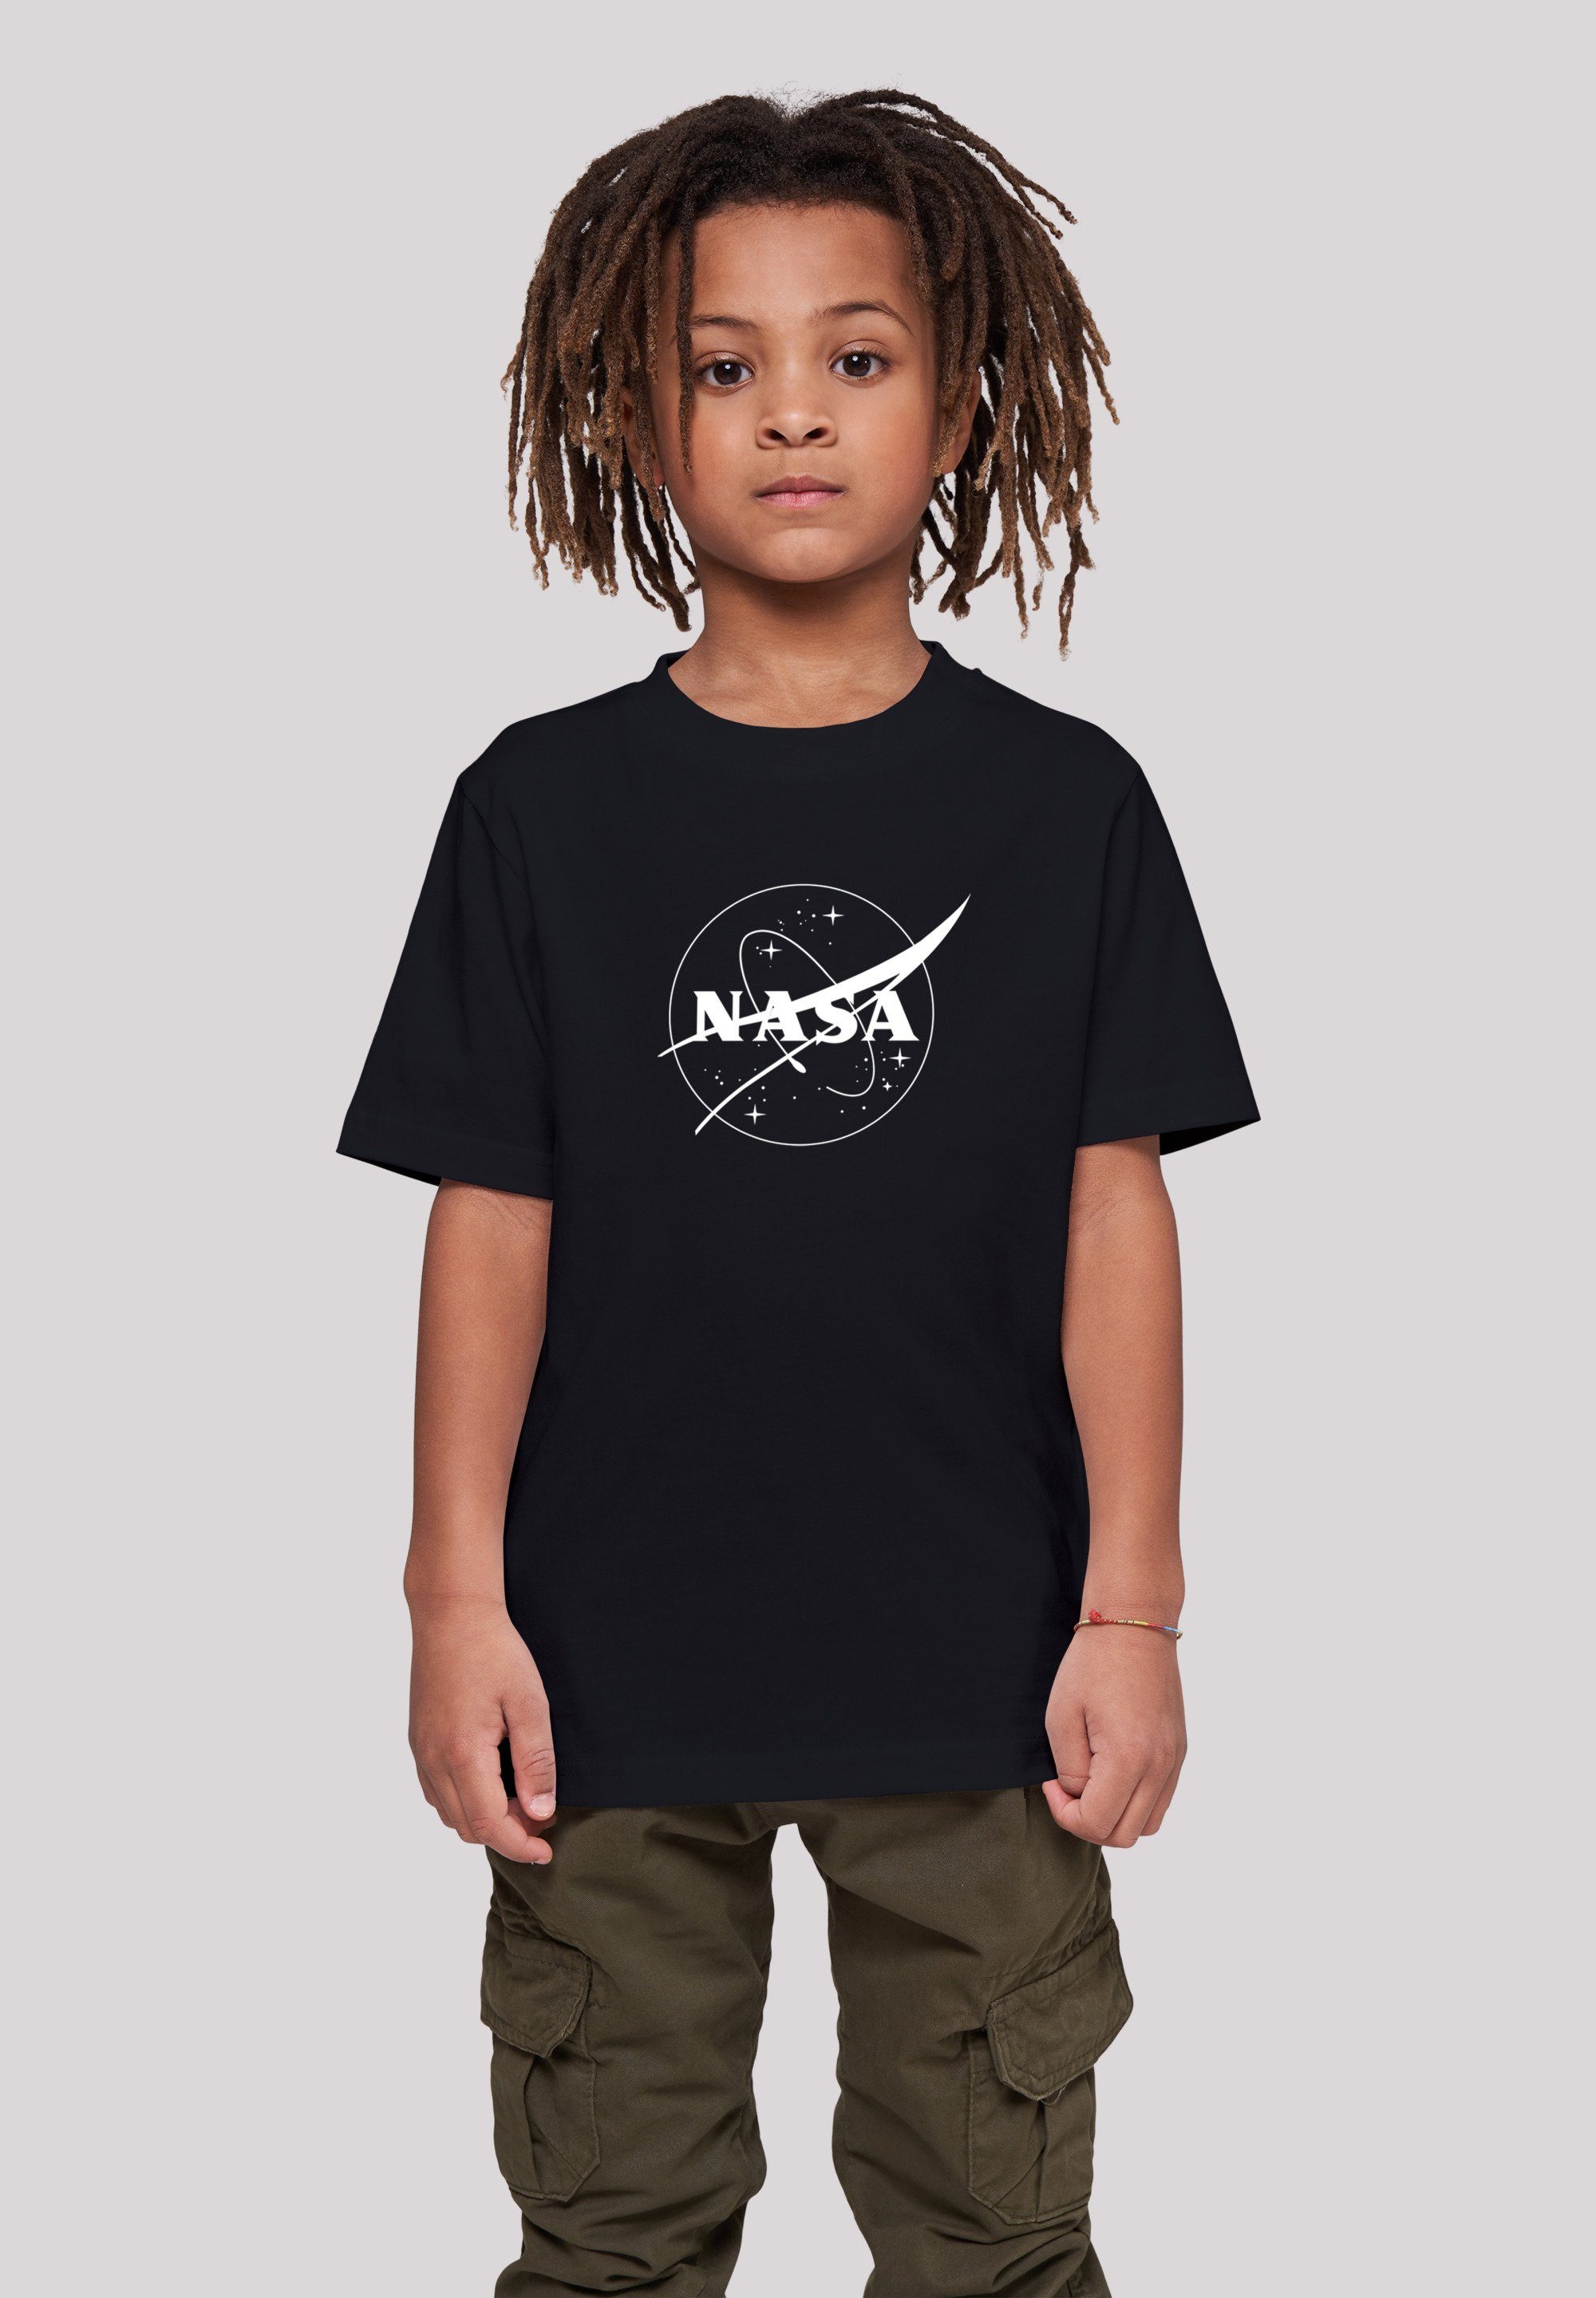 F4NT4STIC T-Shirt NASA Classic Insignia Logo Monochrome Print